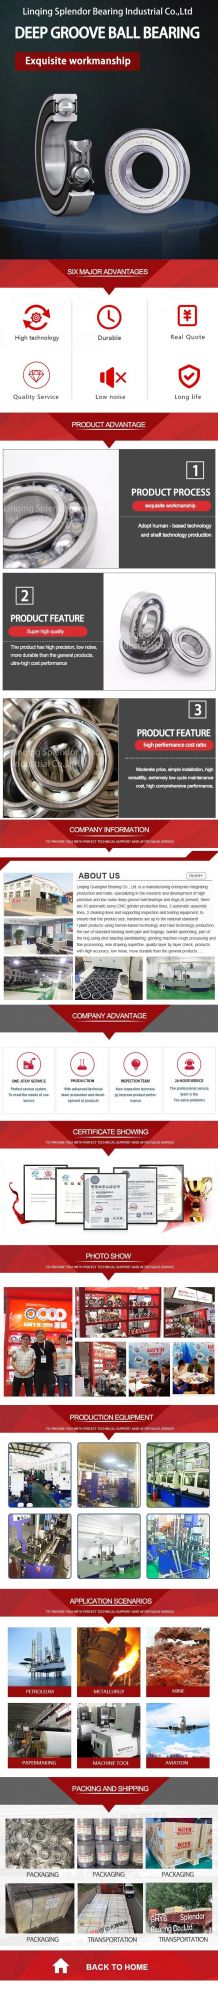 China Factory Distributor Supplier of Deep Groove Ball Bearings for Motors, Compressors, Alternators 6302-2rz/P6/Z2V2